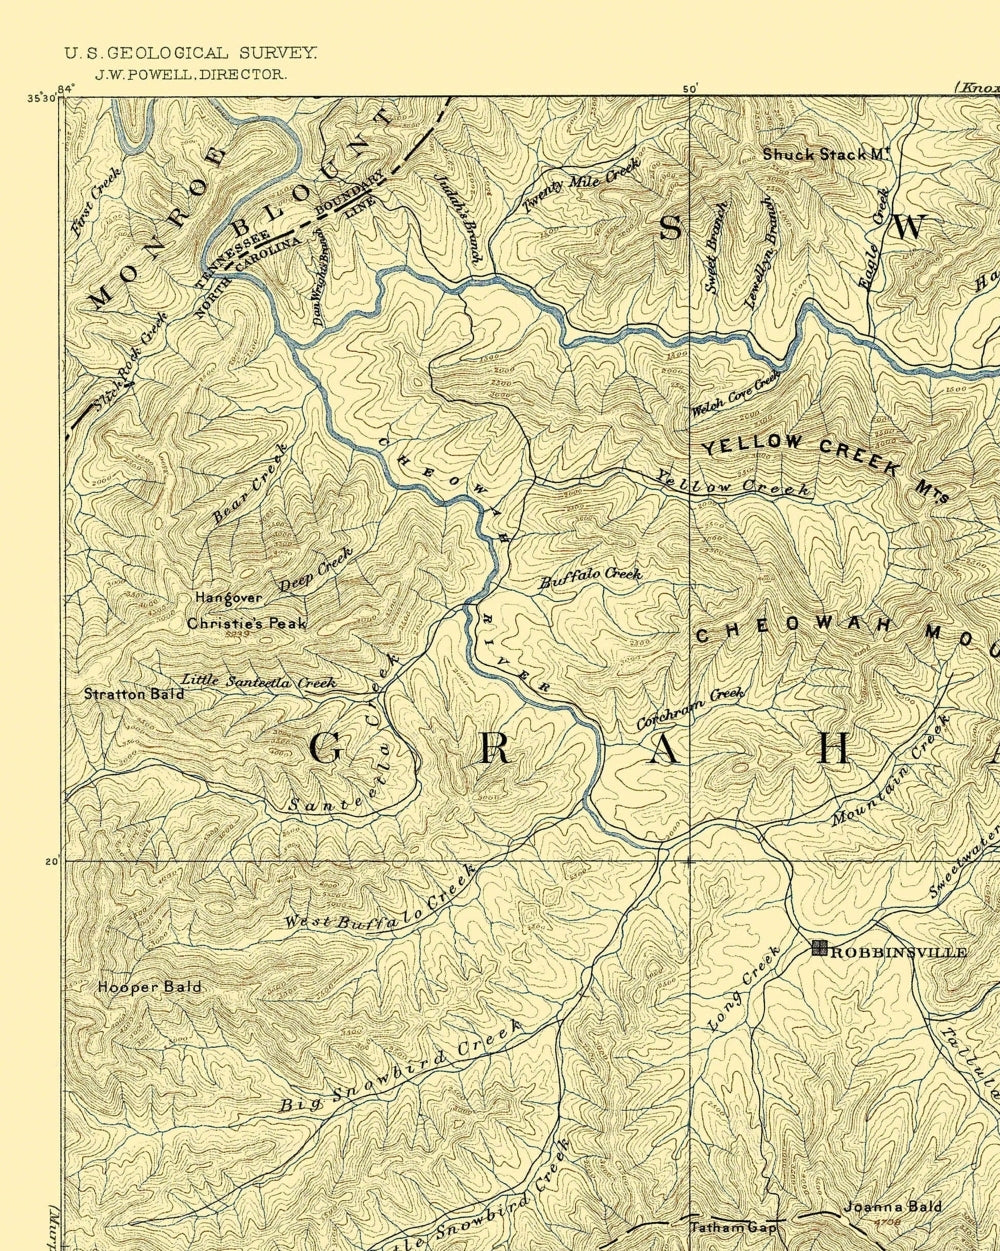 Topographical Map - Nantahalah North Carolina Quad - USGS 1892 - 23 x 28.79 - Vintage Wall Art